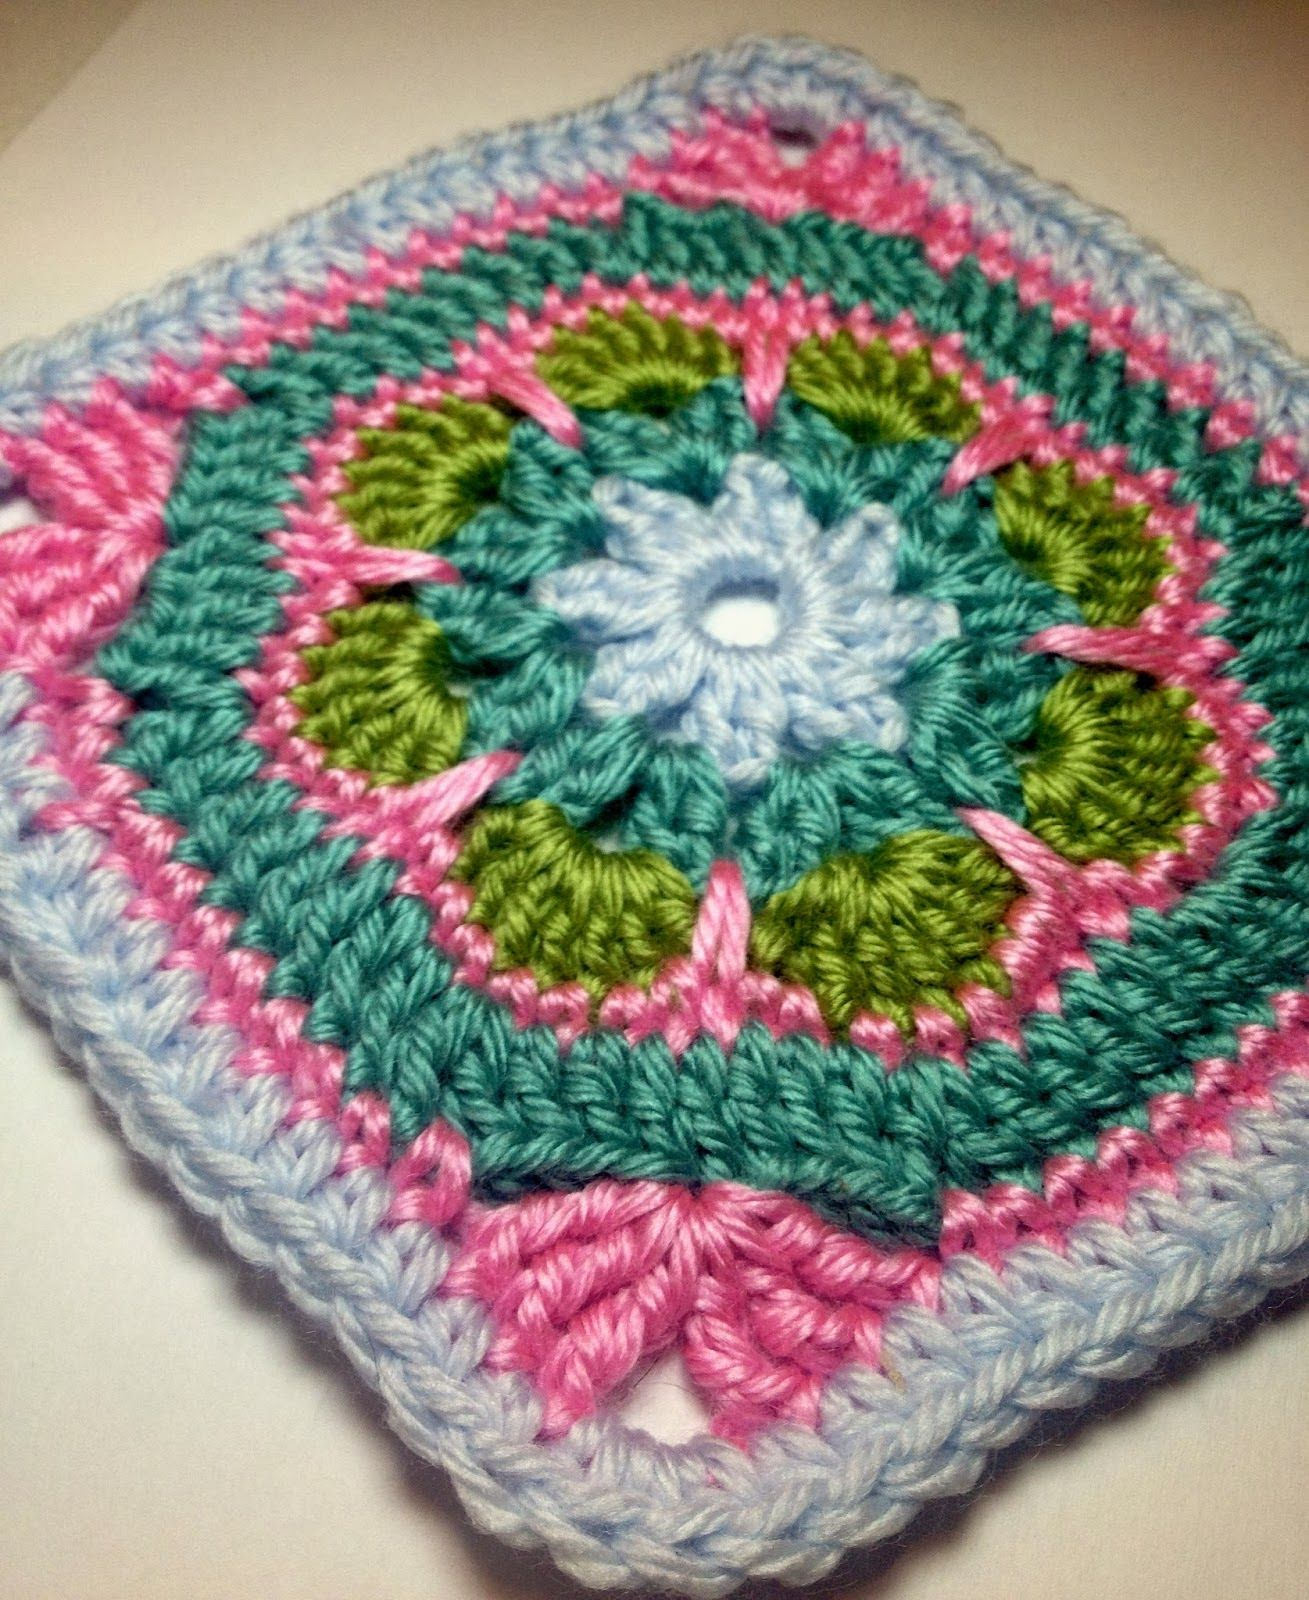 Free Crochet Patterns: Free Crochet Granny Square Motif Patterns - Free Printable Crochet Granny Square Patterns